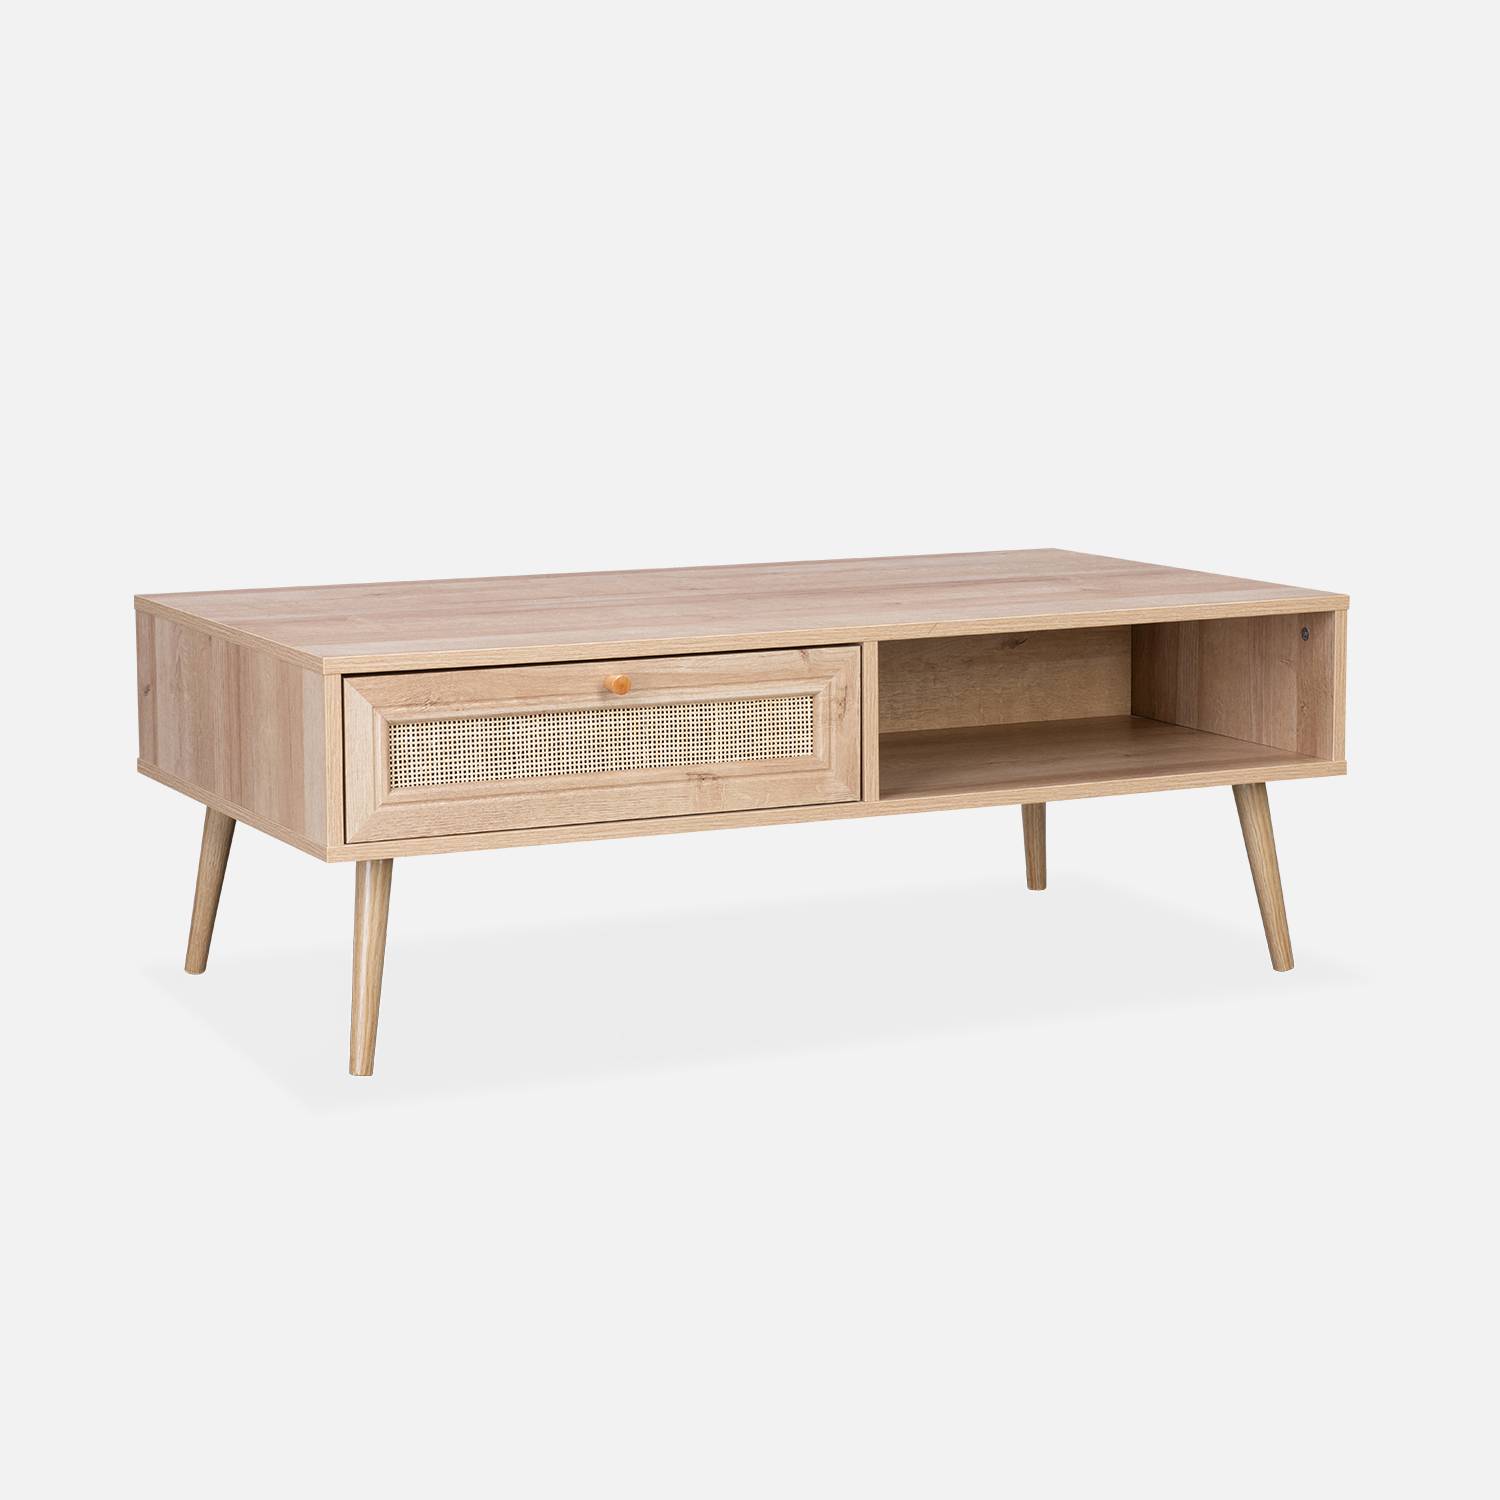 Wood and woven rattan coffee table with storage, 110x59x39cm, Natural, Boheme,sweeek,Photo2